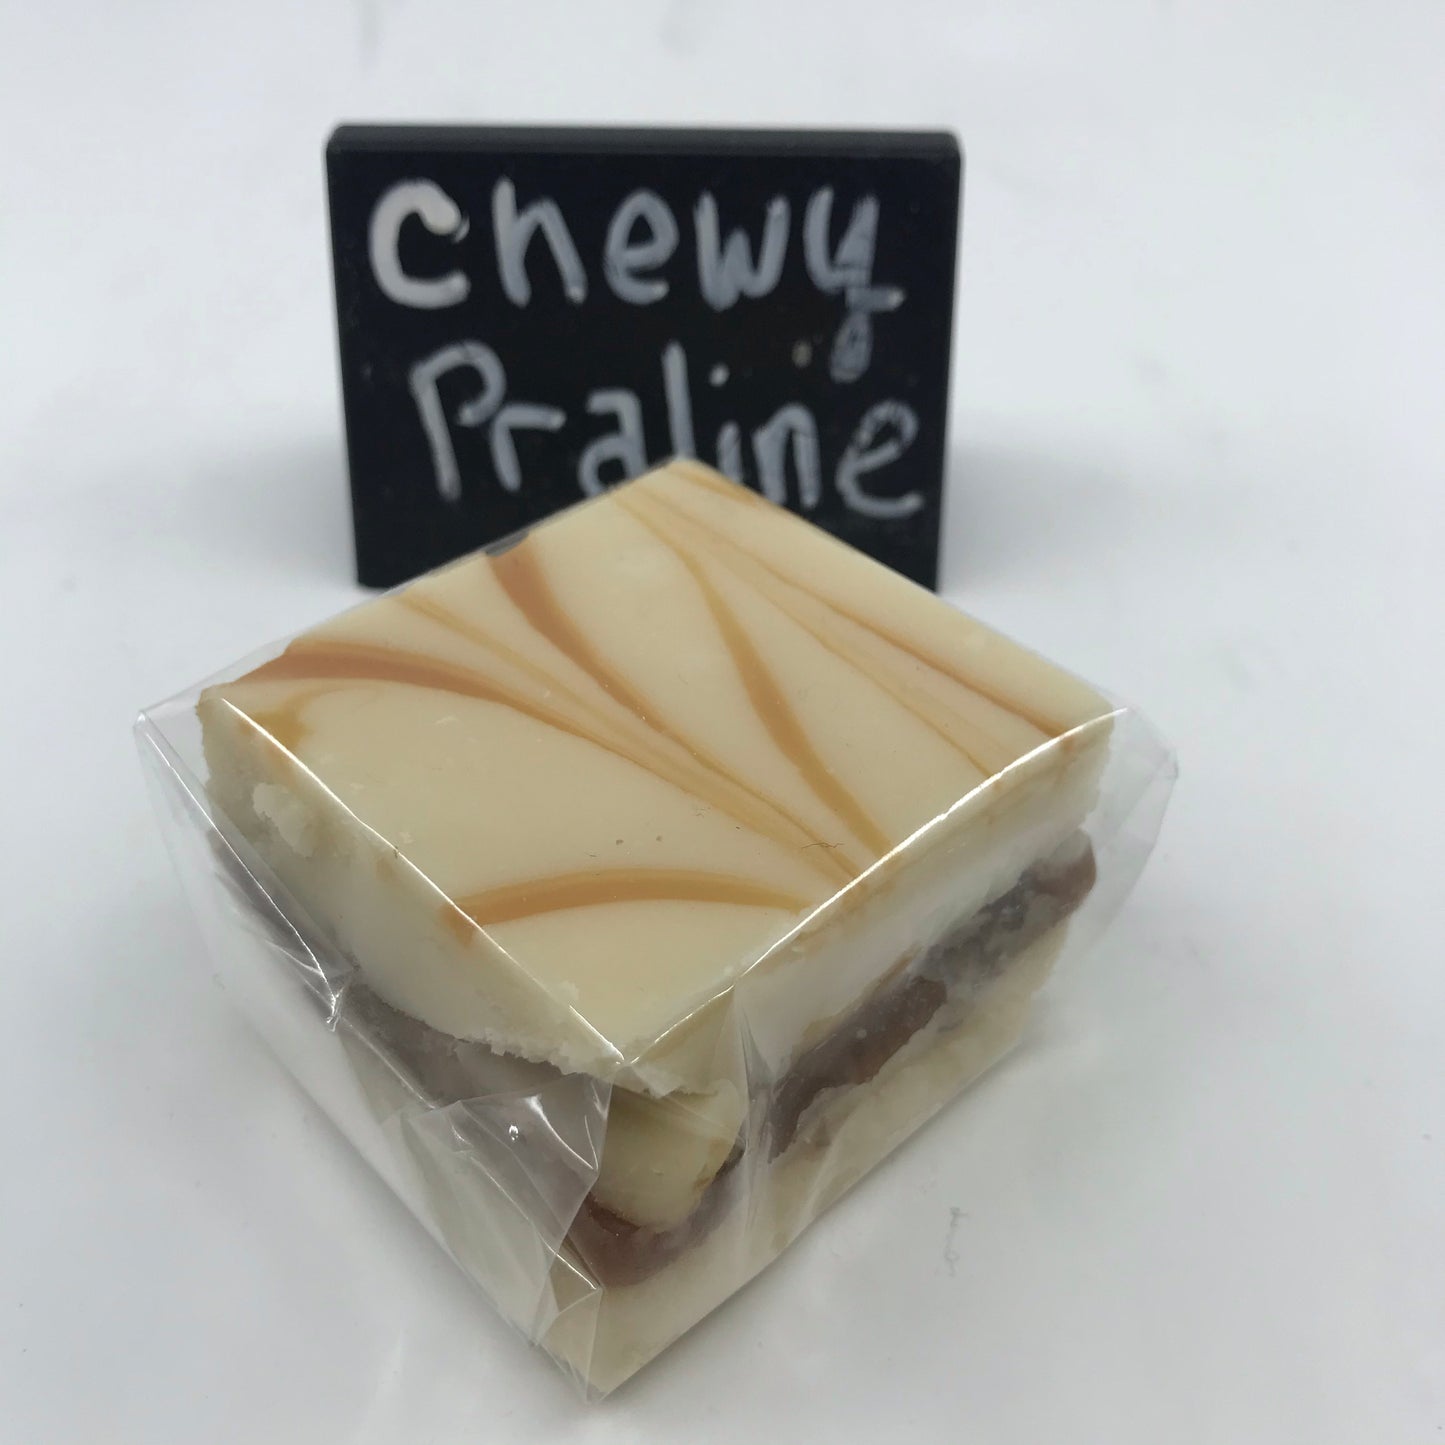 Chewy Praline Fudge